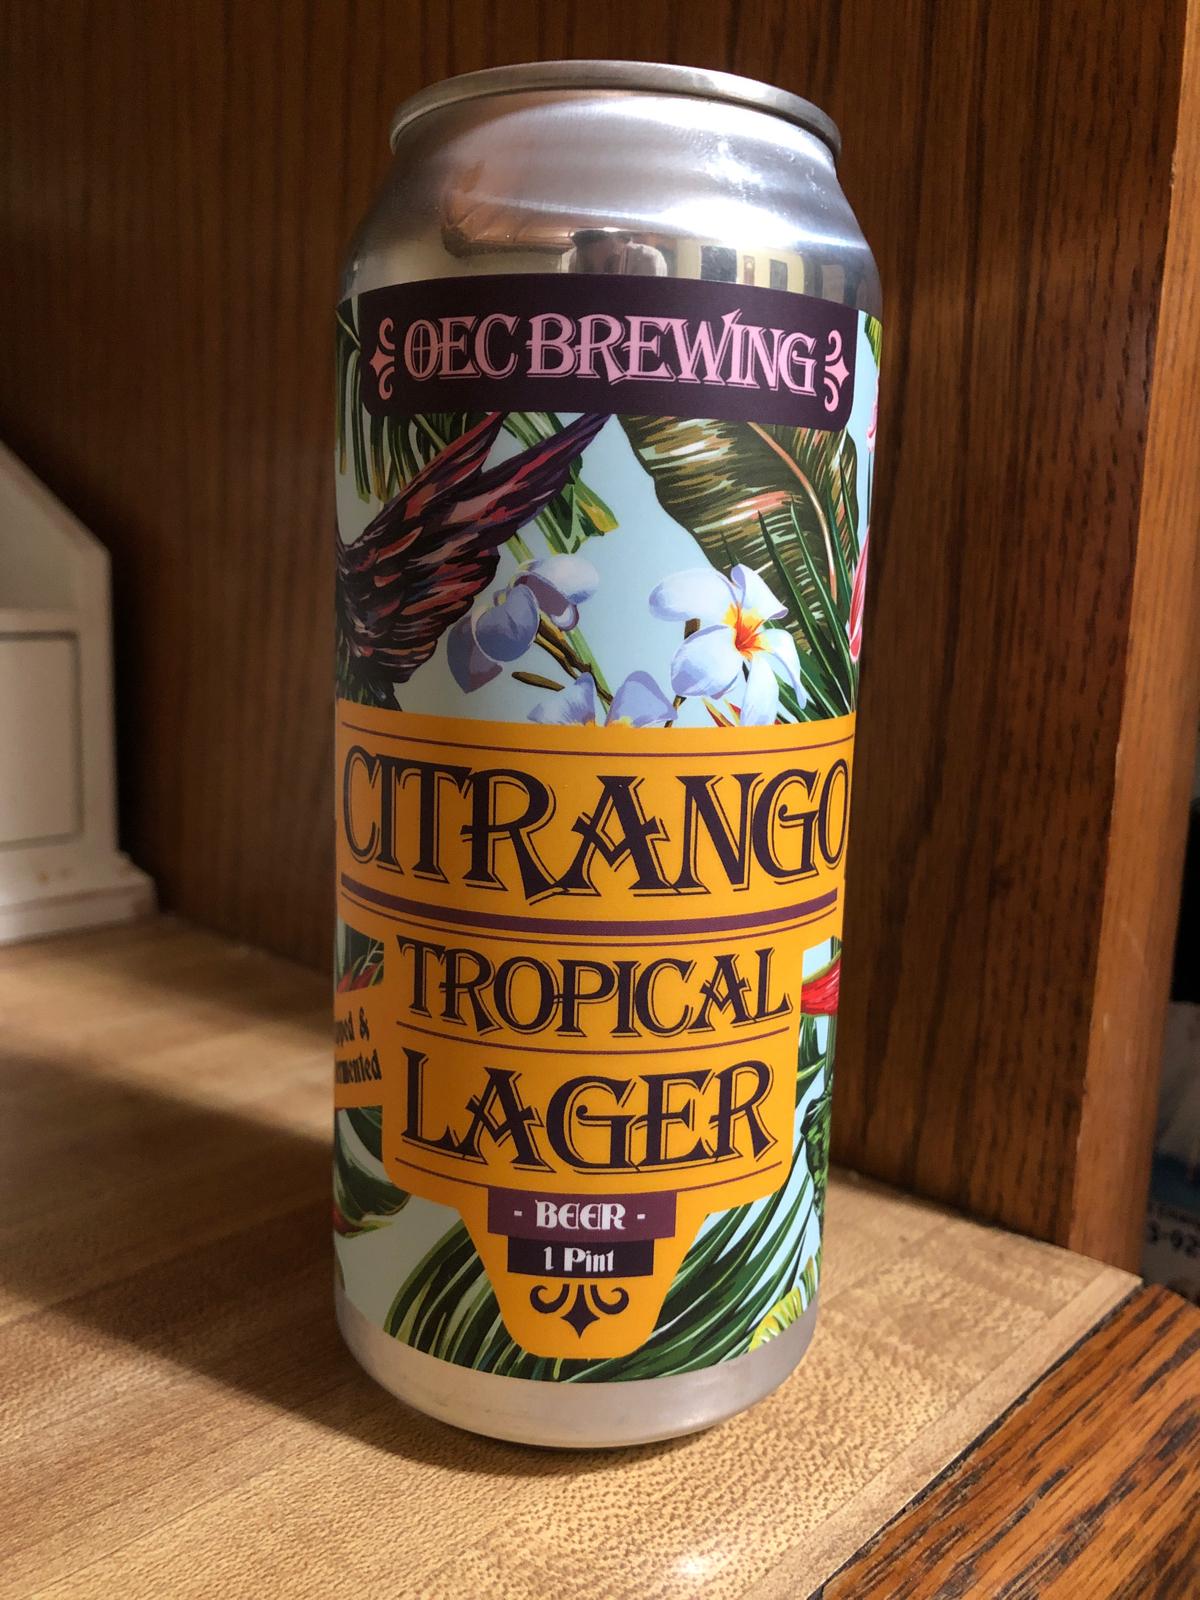 Citrango Tropical Lager